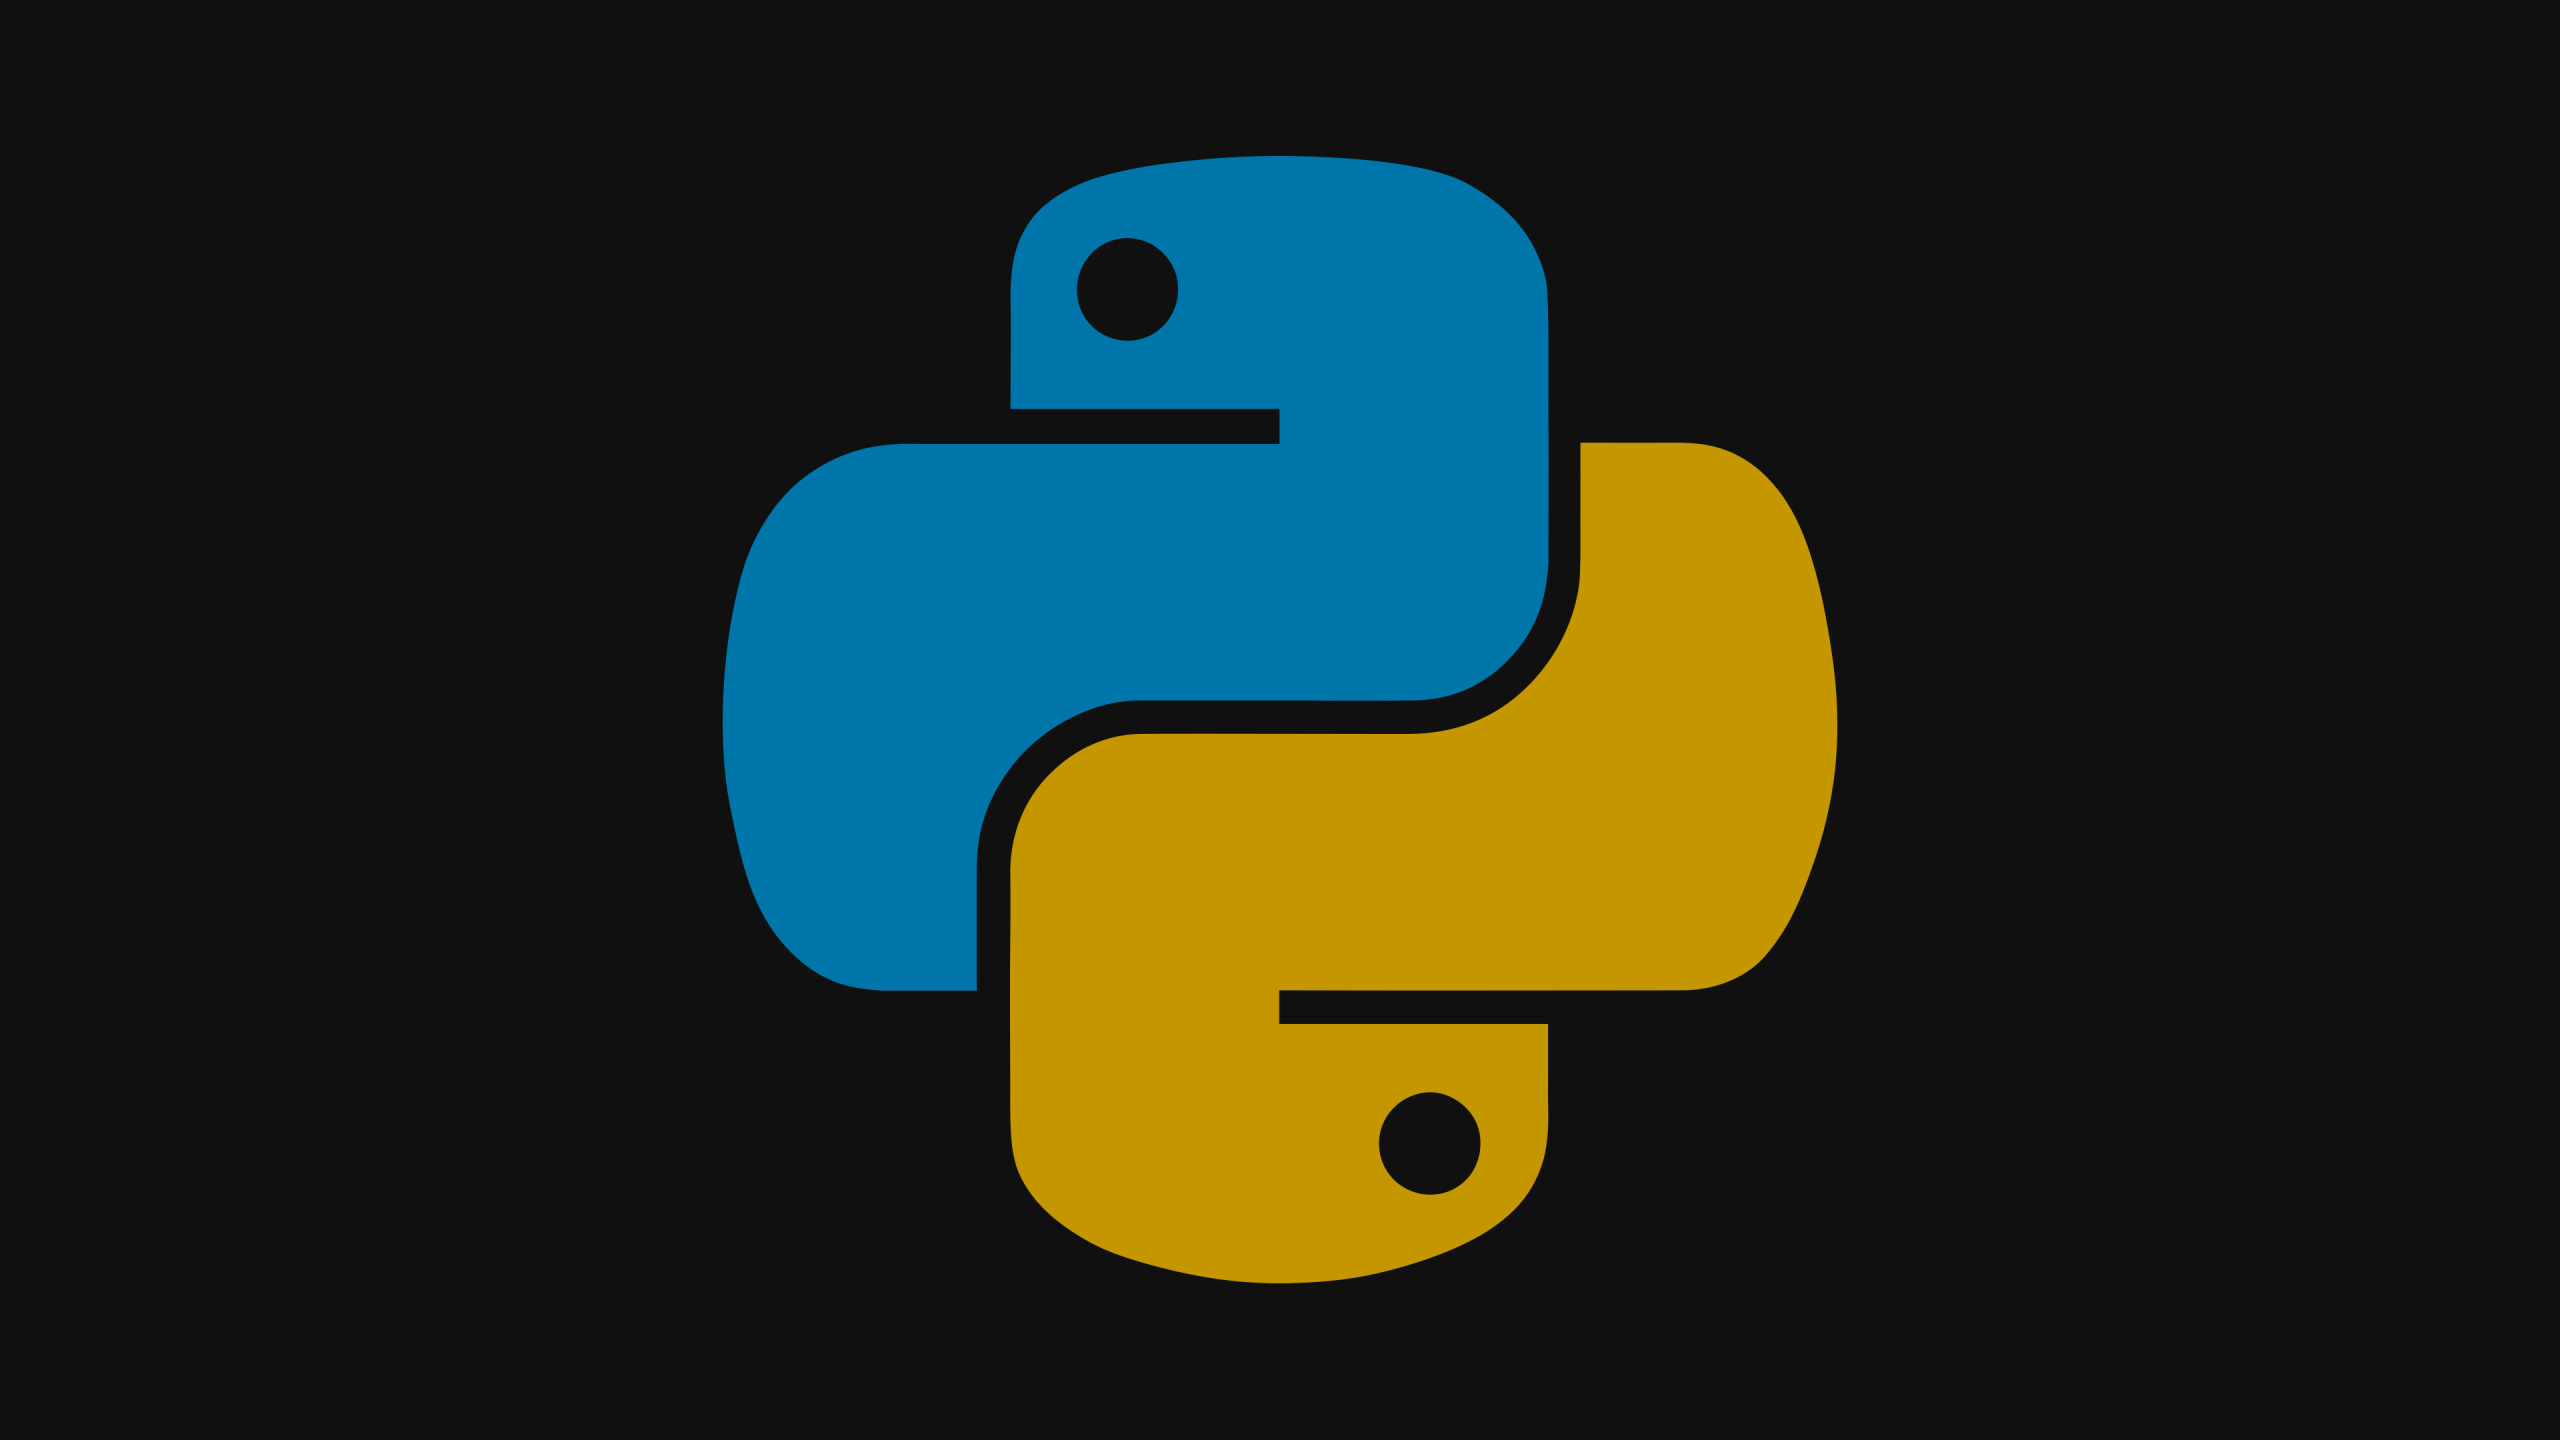 K 0 k python. Пайтон ава. Питон язык программирования лого. Python картинки. Значок питона.